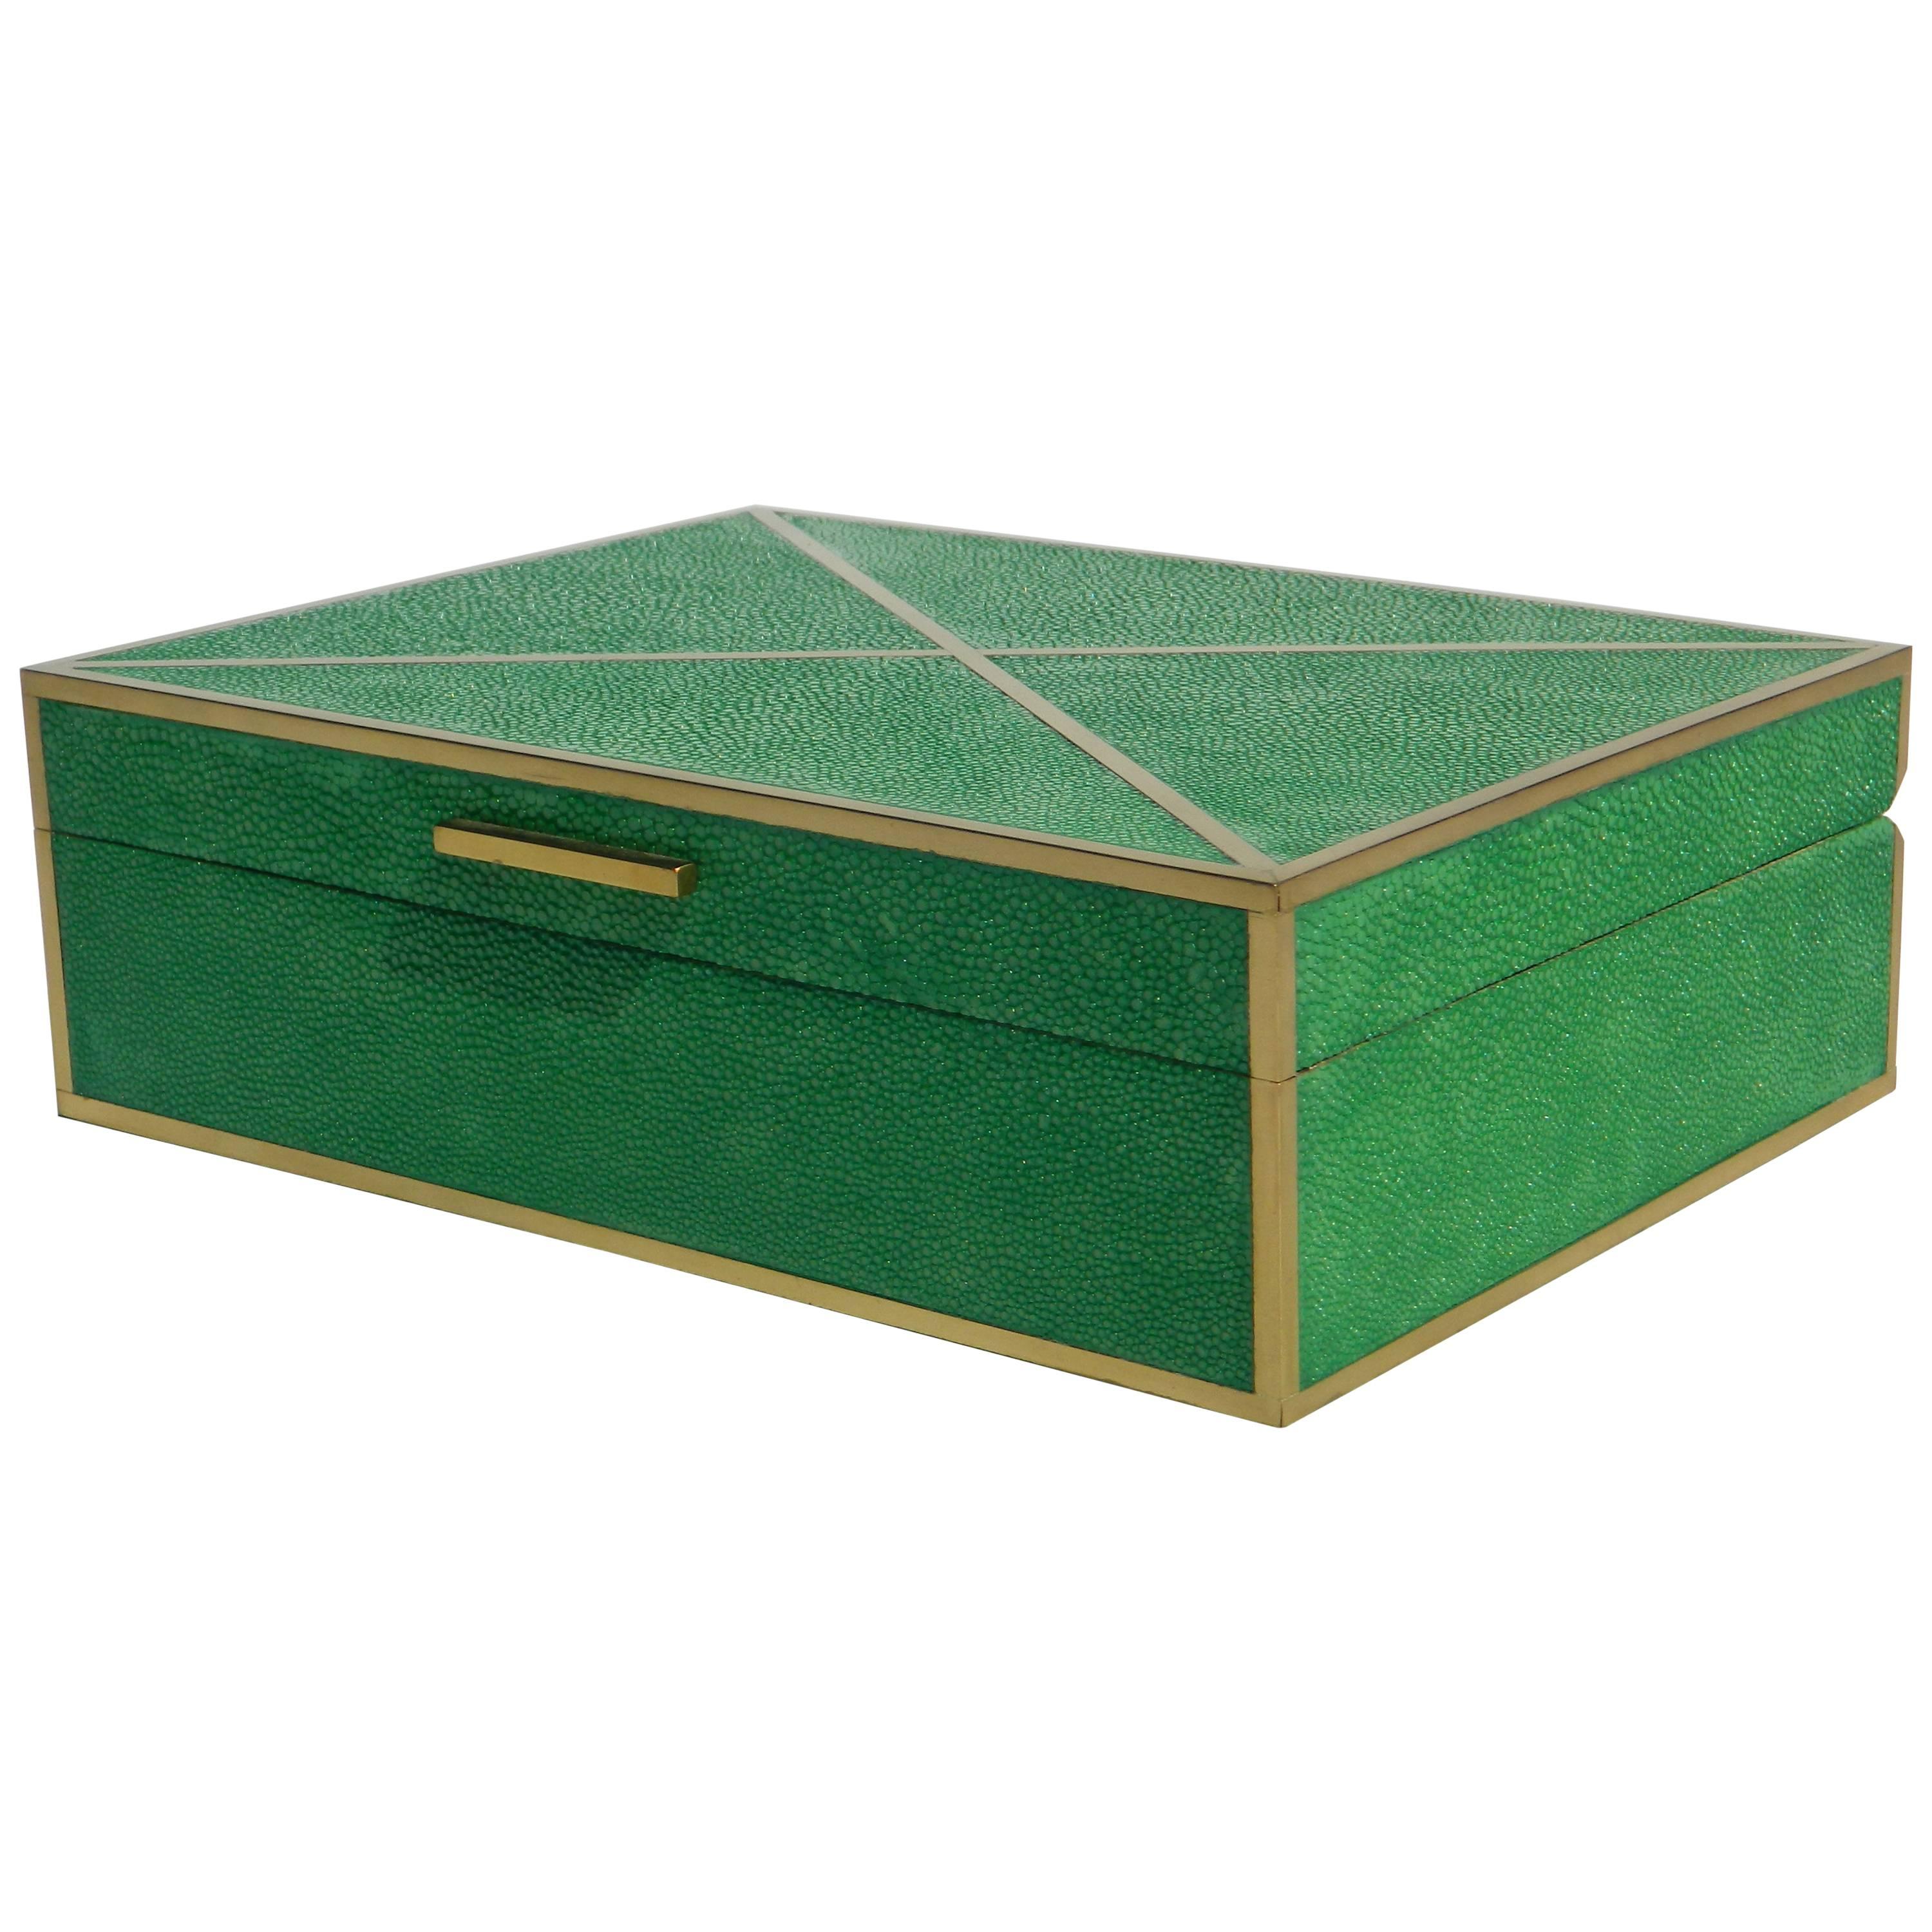 Emerald Green Shagreen Box with Brass Inlay